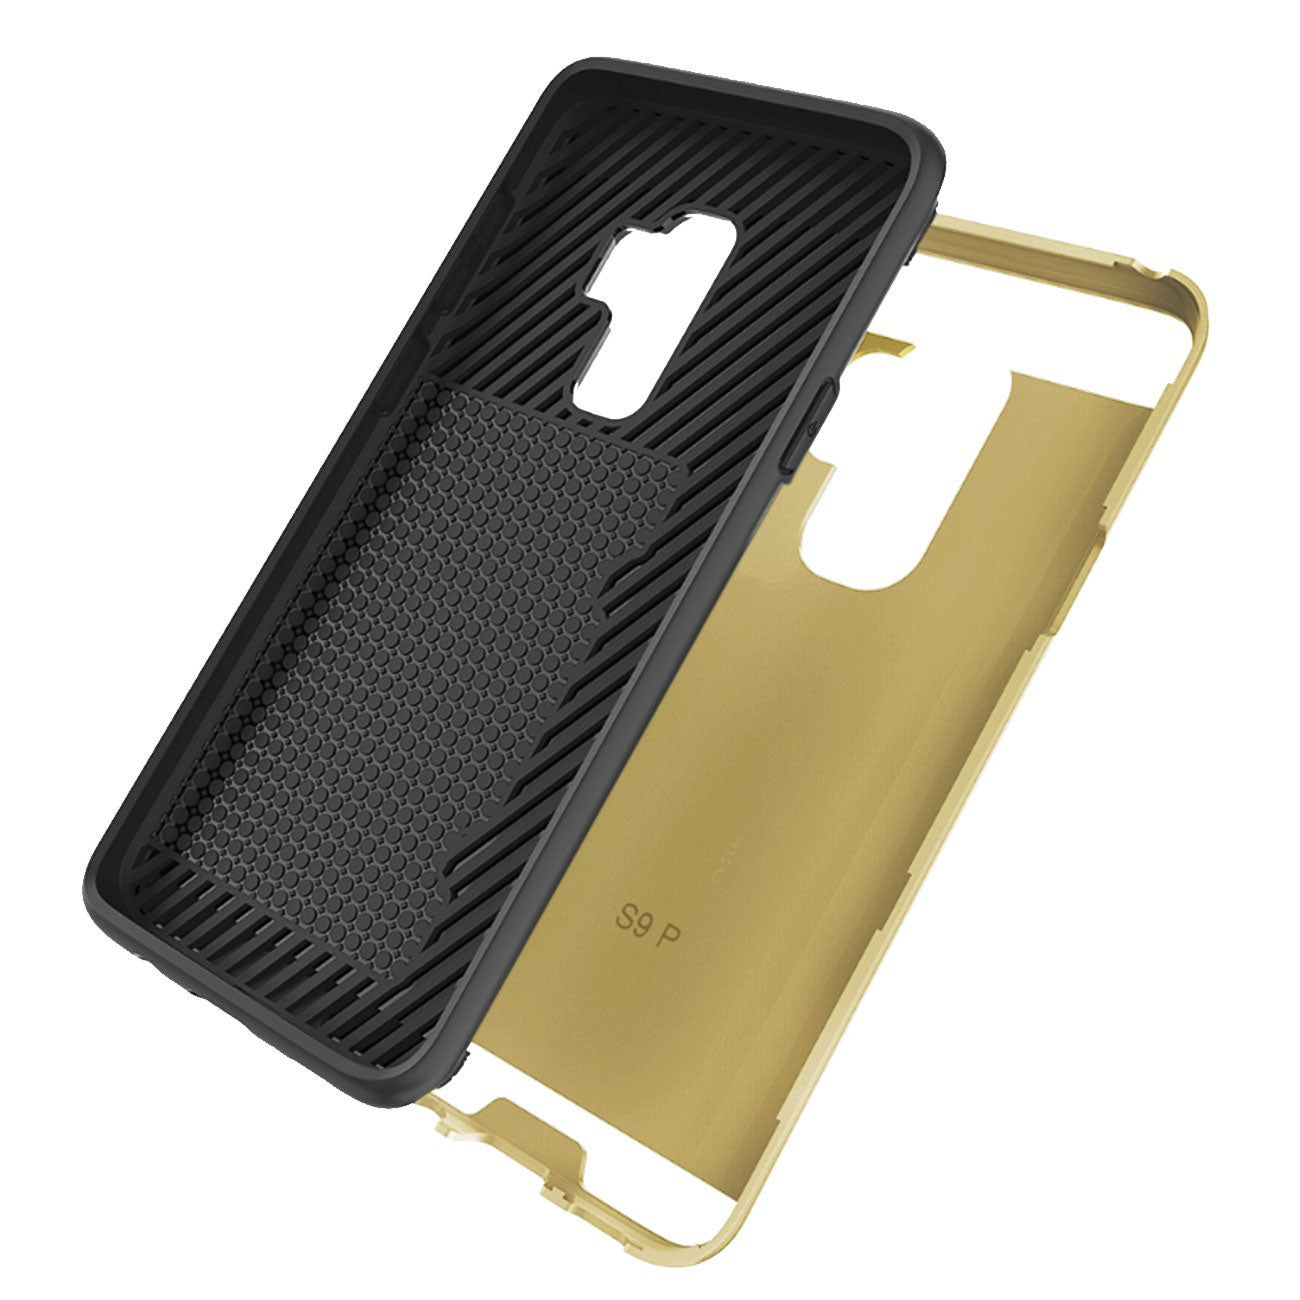 Samsung Galaxy S9 Plus Slim Armor Hybrid Case With Card Holder In Gold